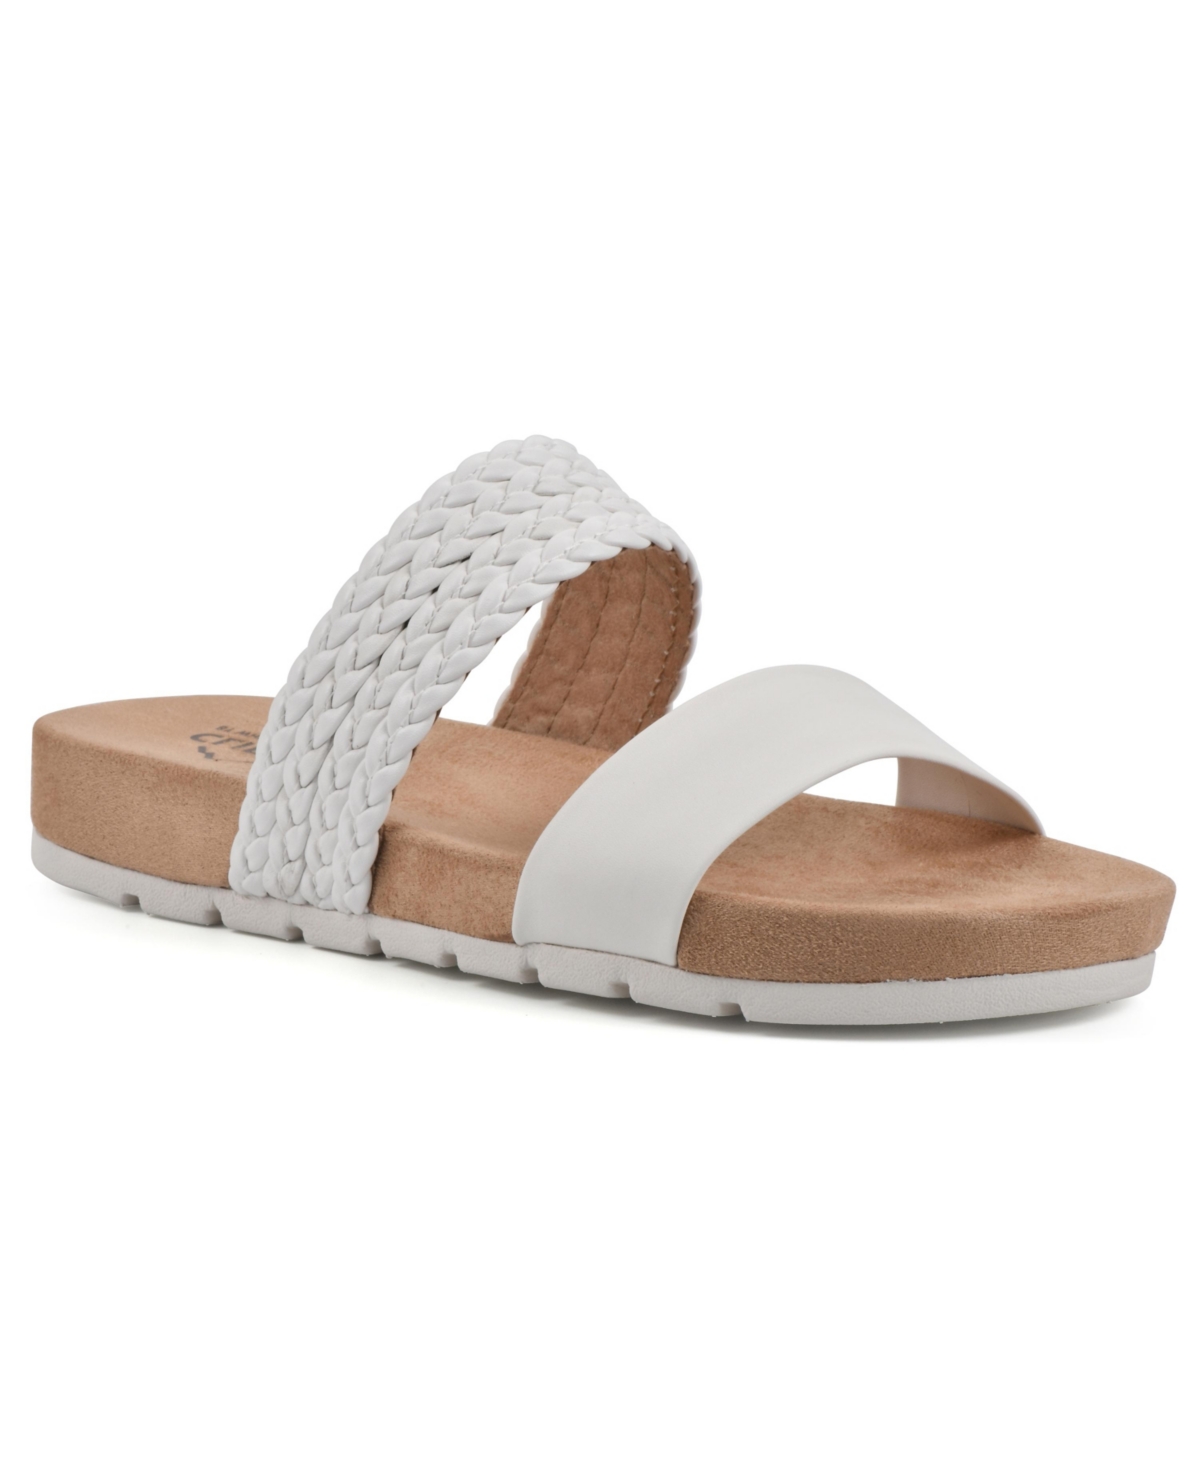 Tactful Slide Sandal - White Multi Smooth